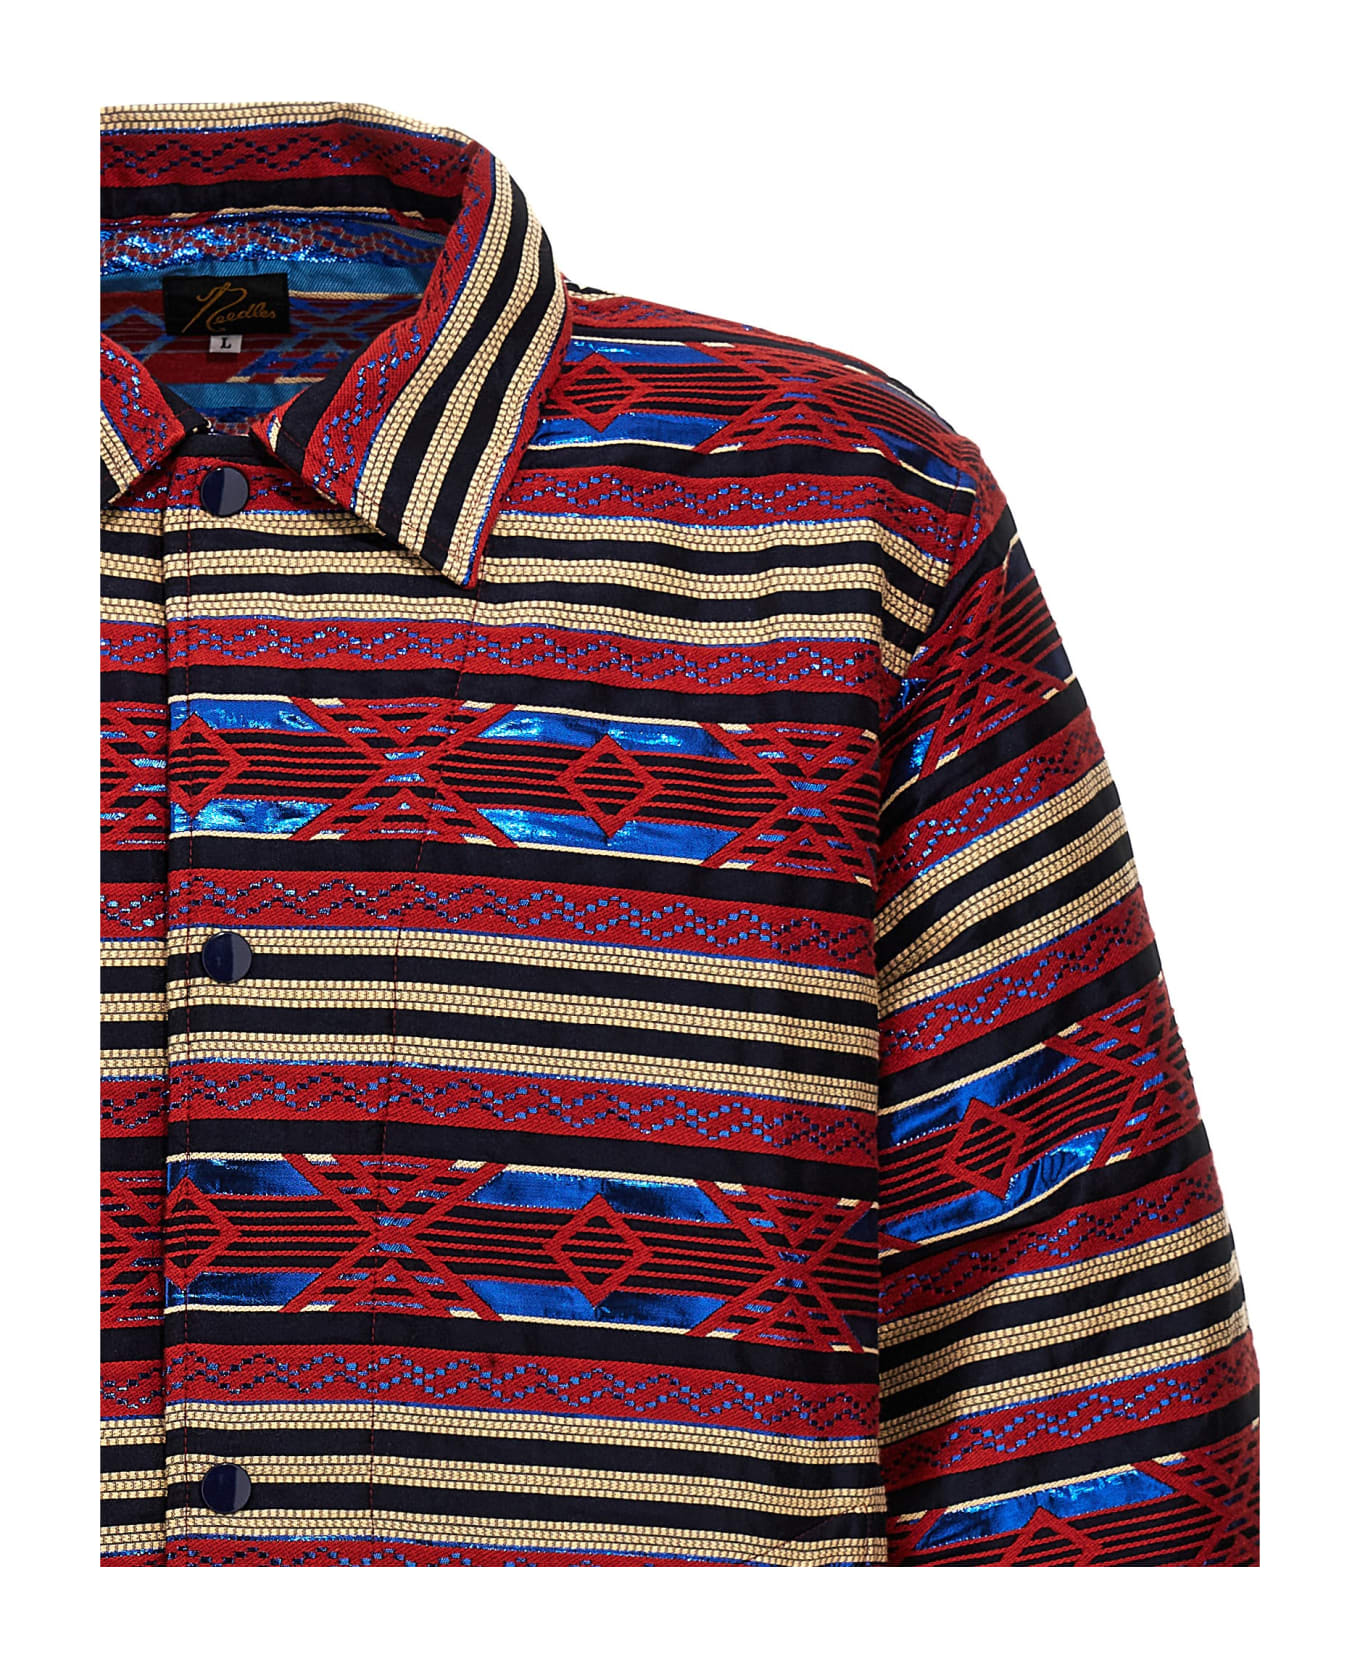 Needles Patterned Jacket - Multicolor ジャケット